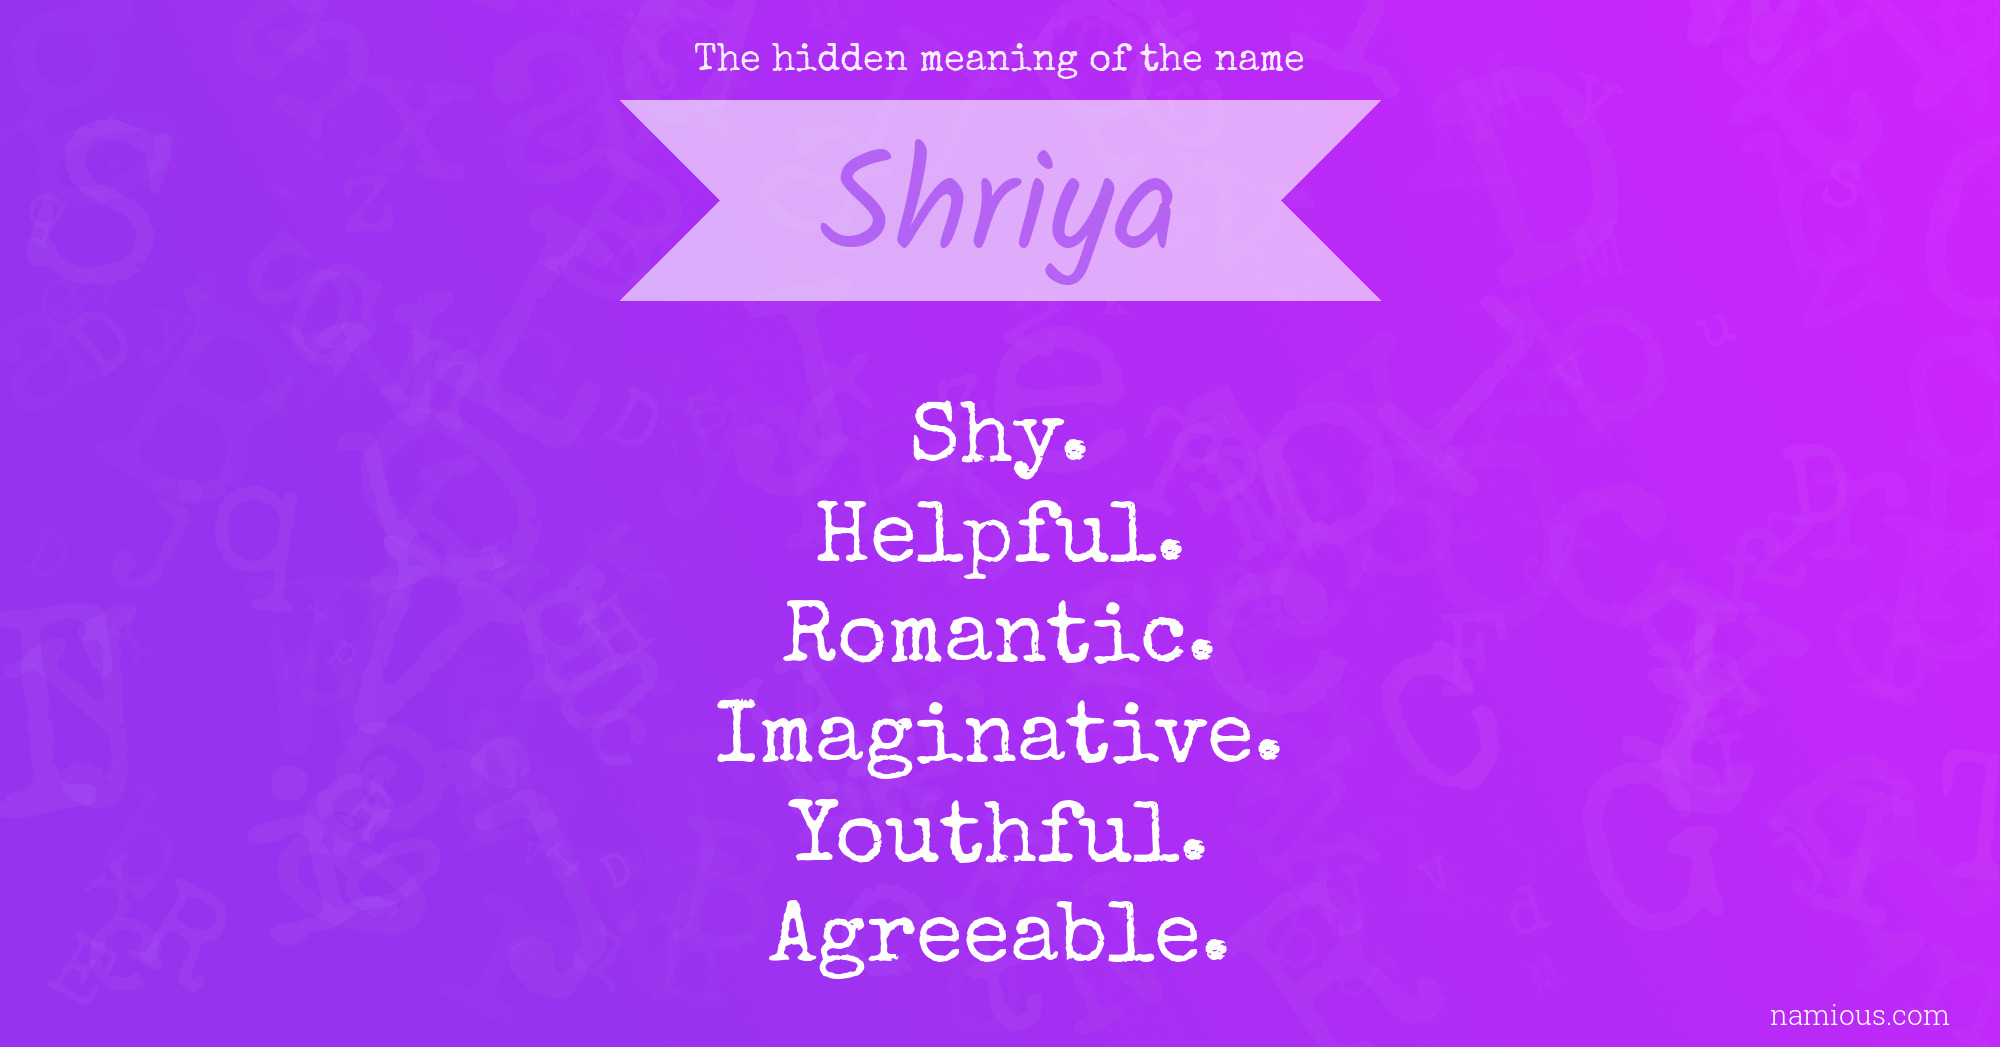 The hidden meaning of the name Shriya